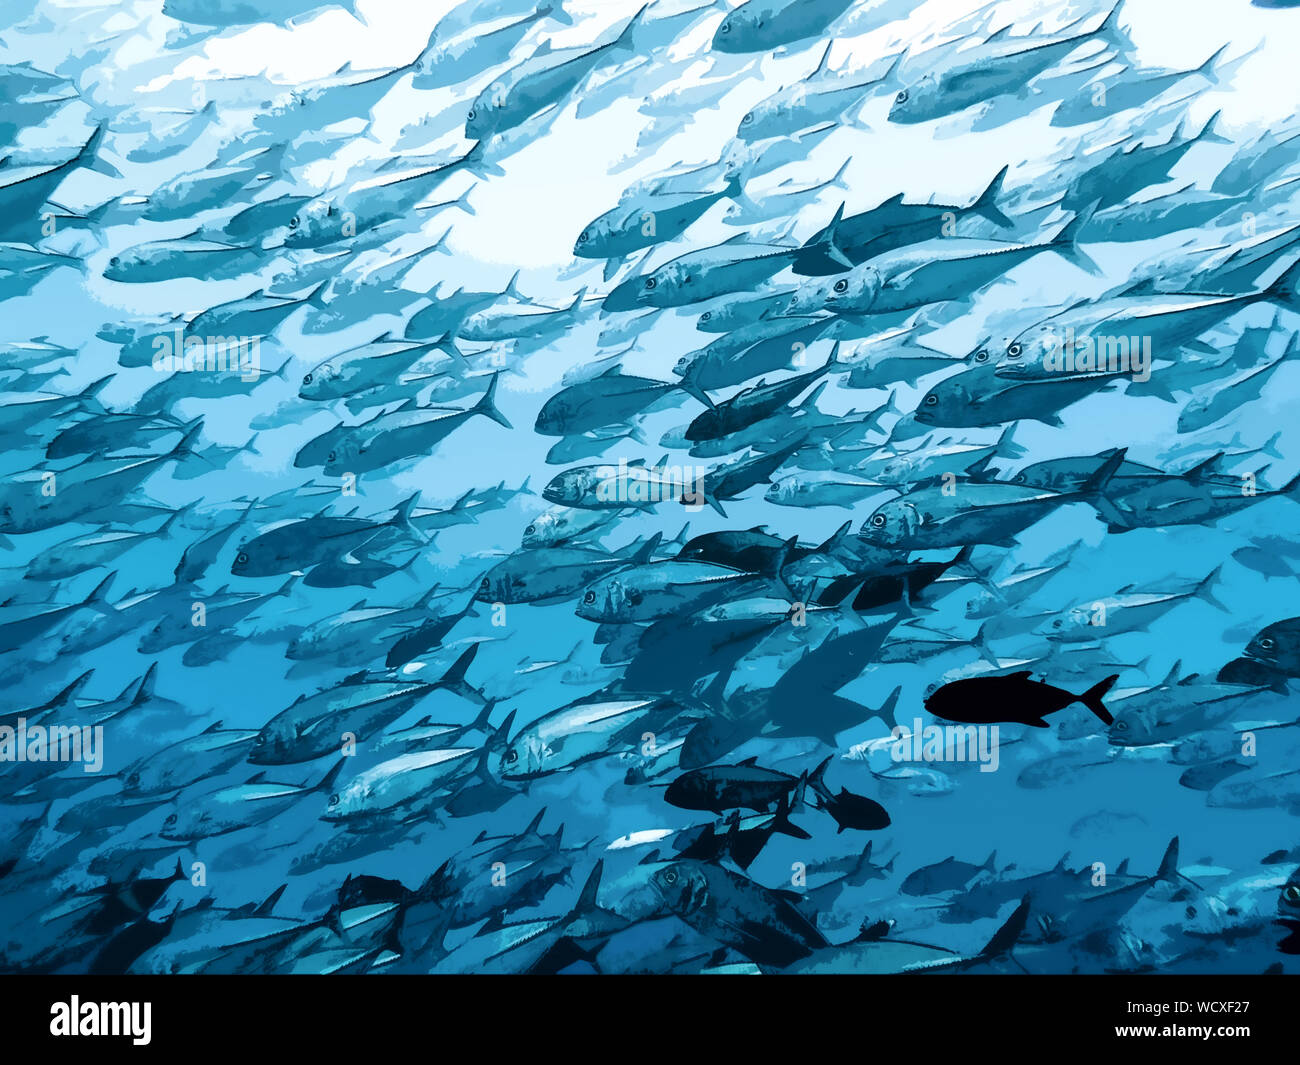 Fish, Shoaling and schooling - Underwater Art Illustration Stock Photo